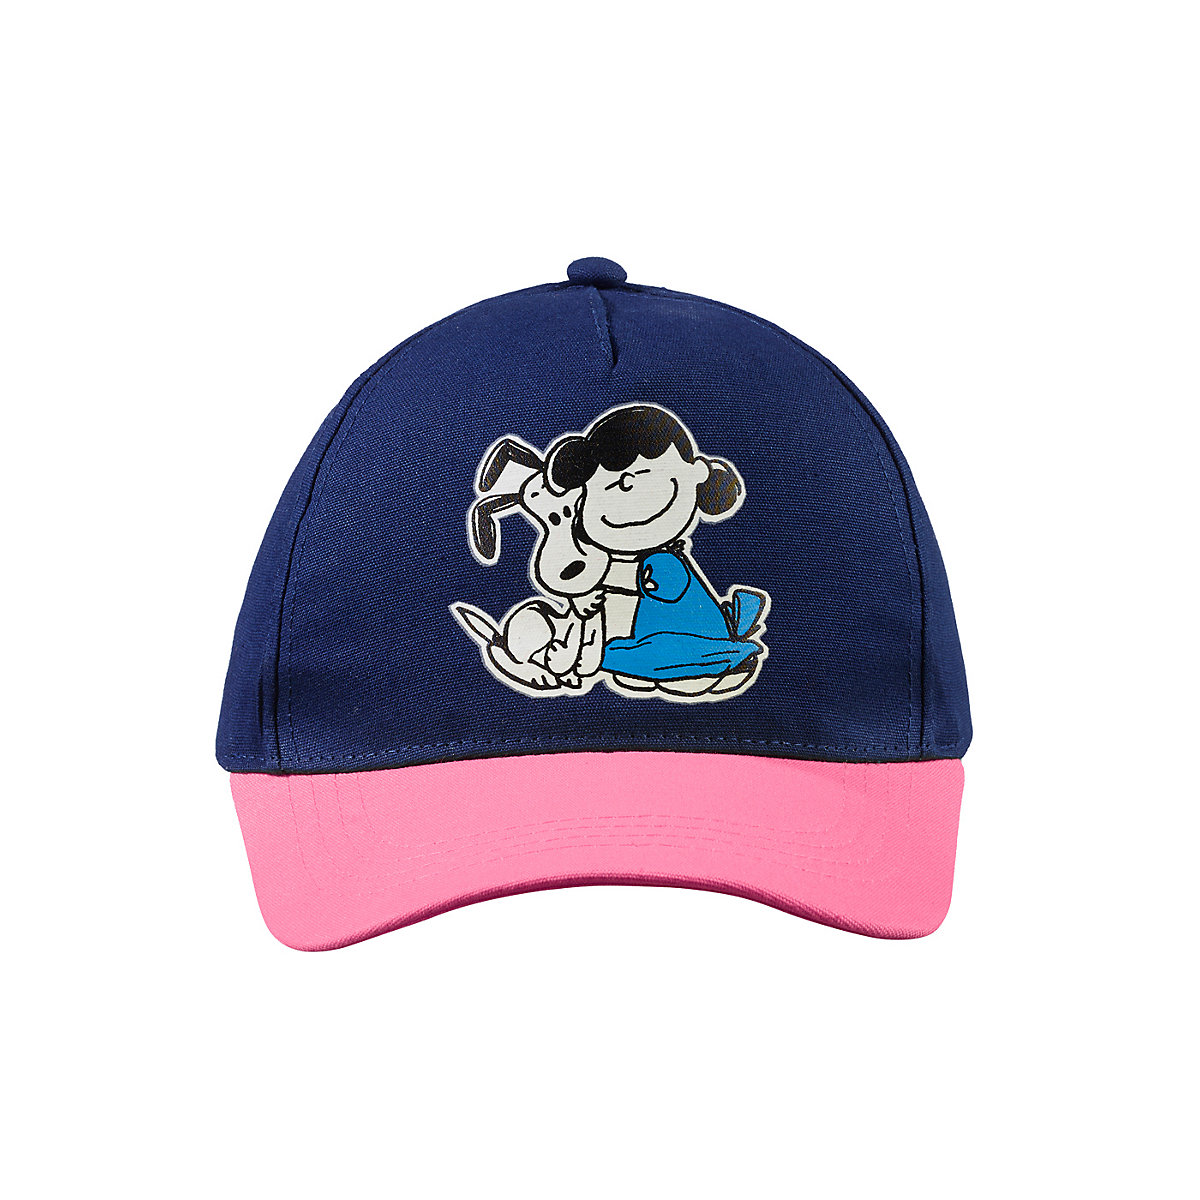 ONOMATO! Peanuts Snoopy und Lucy van Pelt Kinder Kappe Baseball-Cap Mütze Sommer-Hut blau